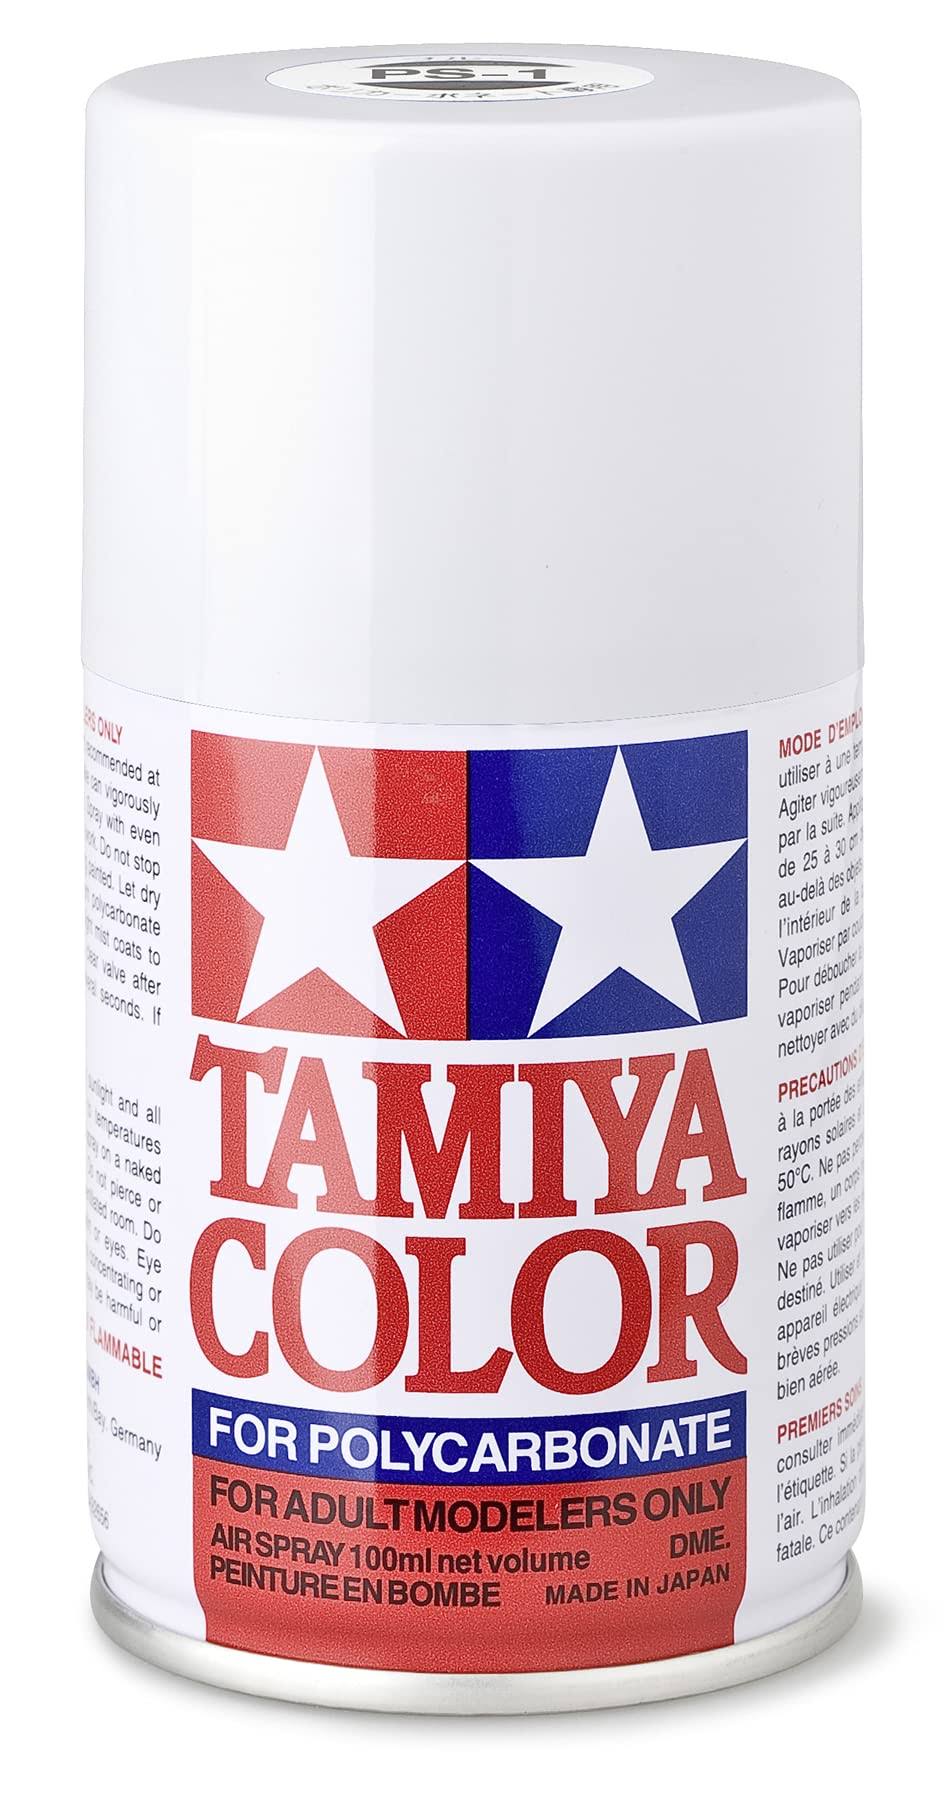 Tamiya Color - White, 100ml